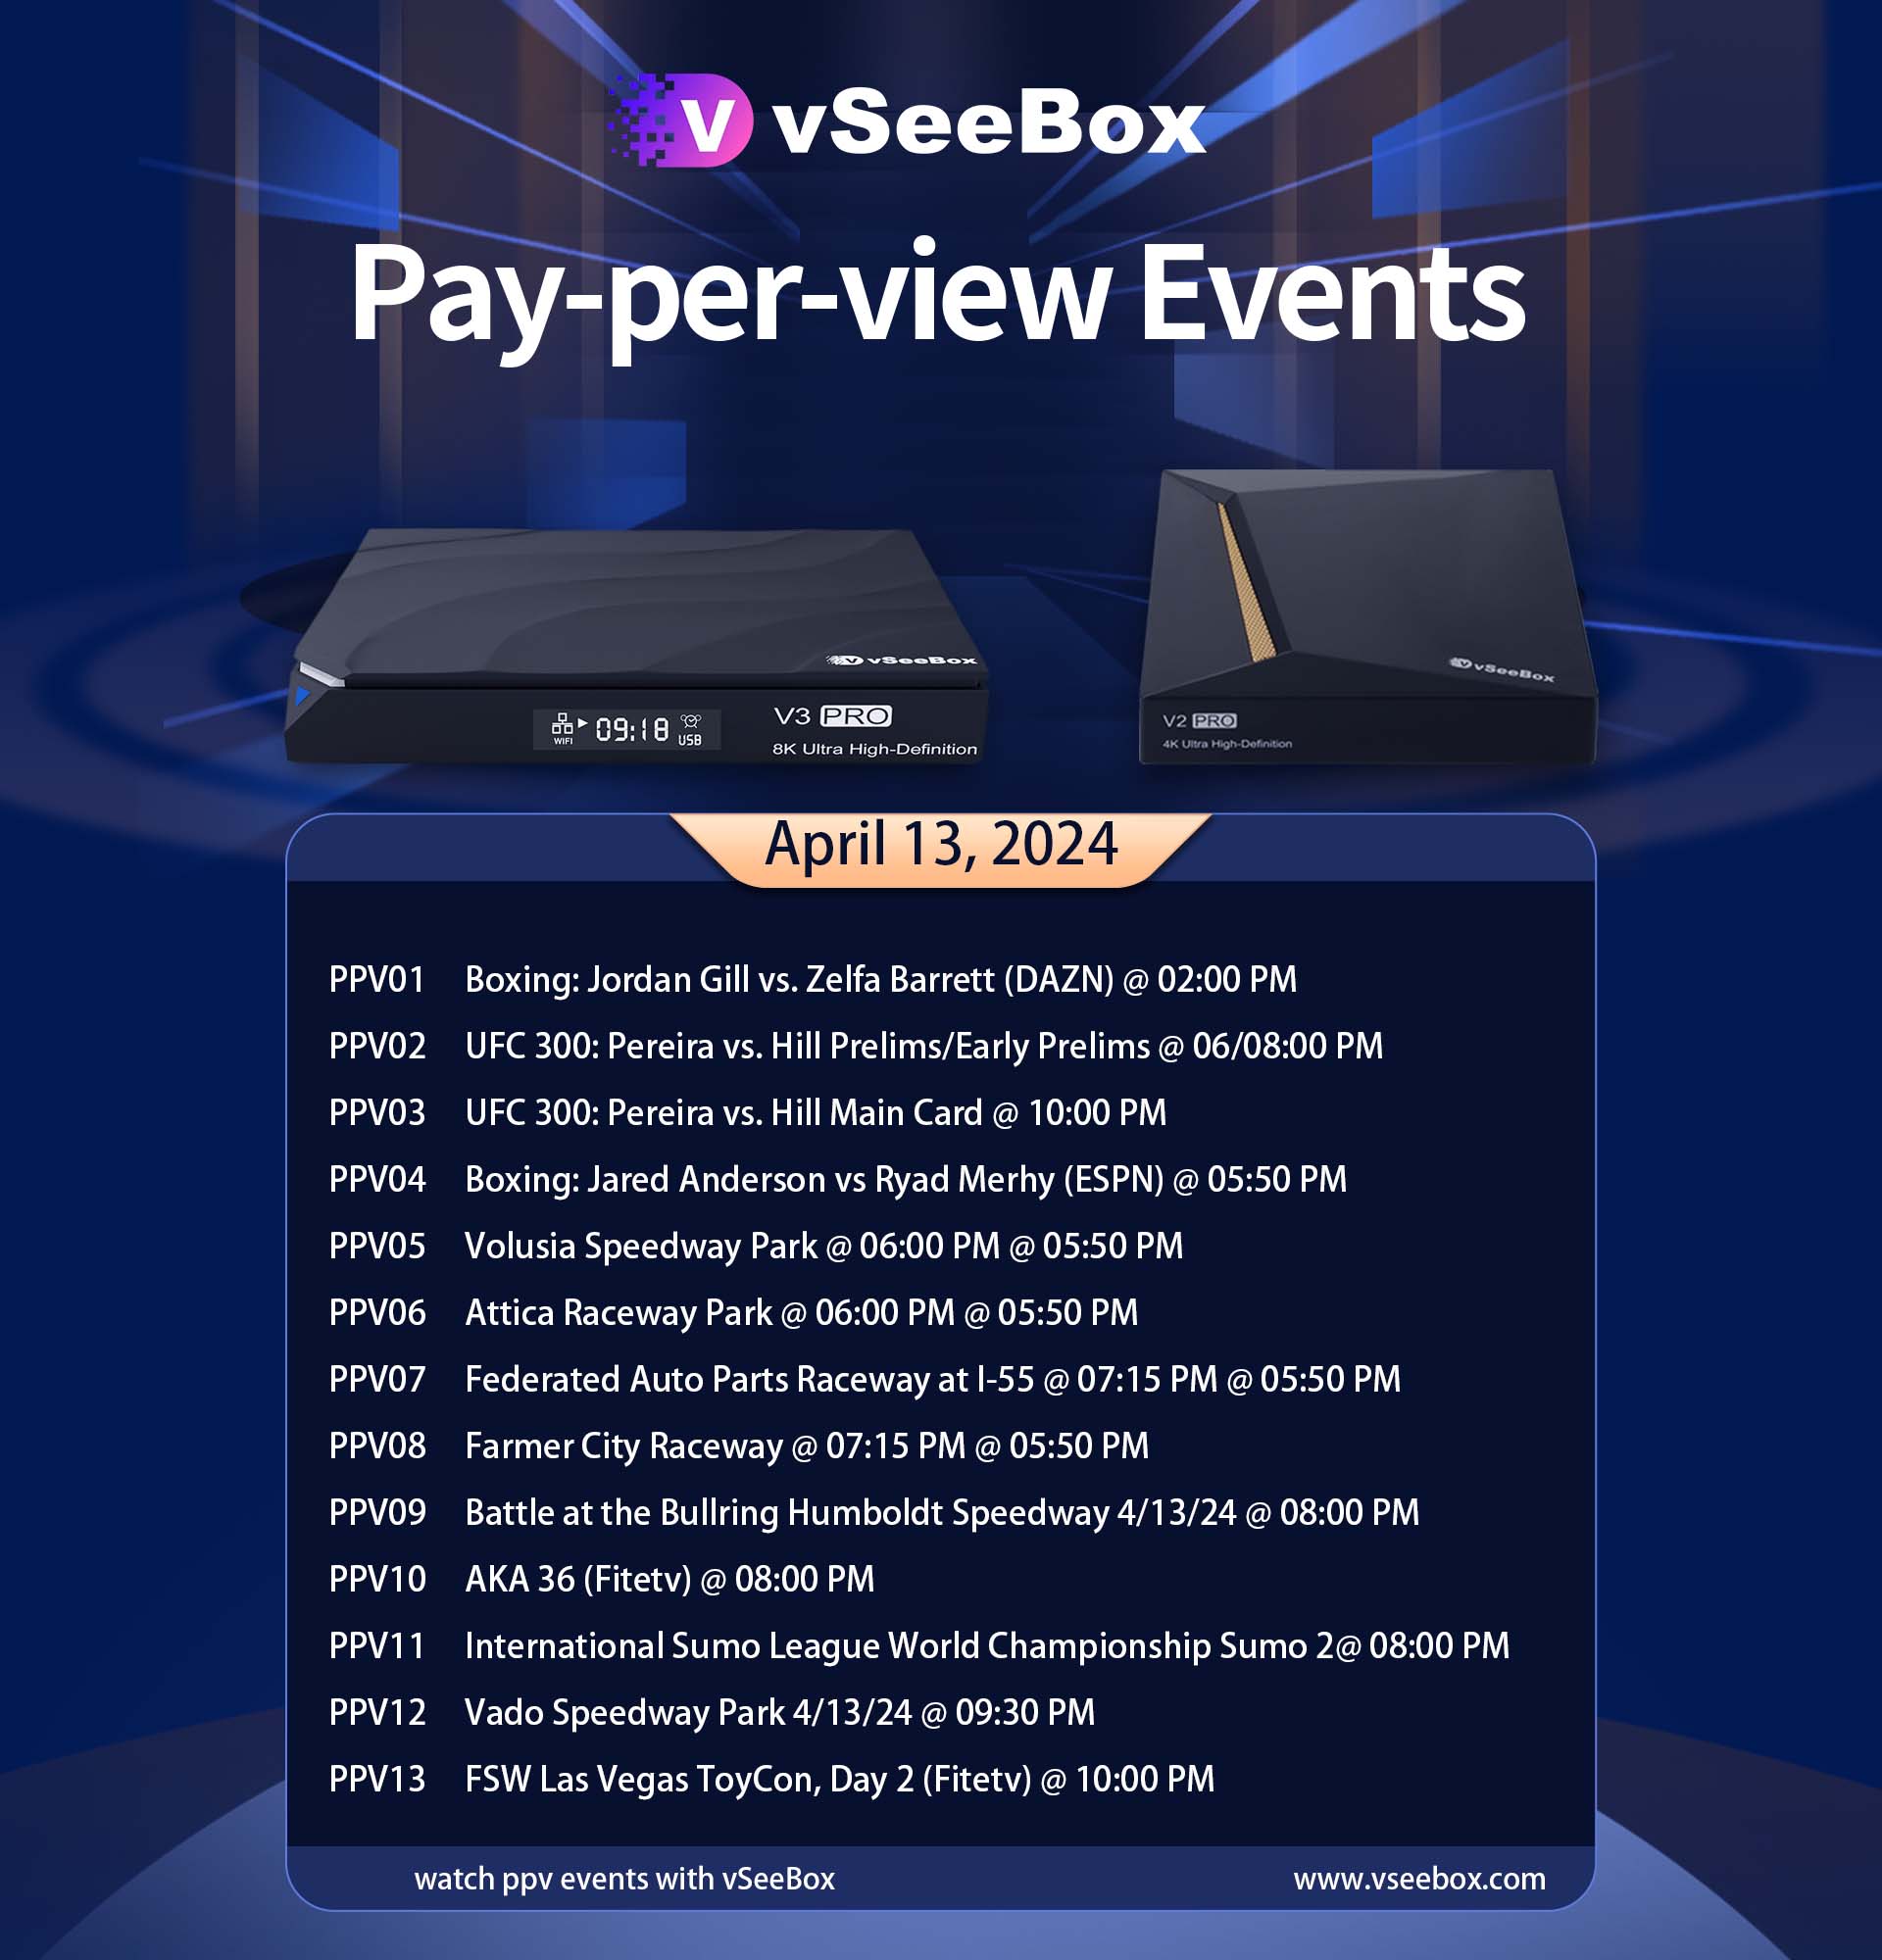 vSeeBox PPV Schedule: April 13, 2024